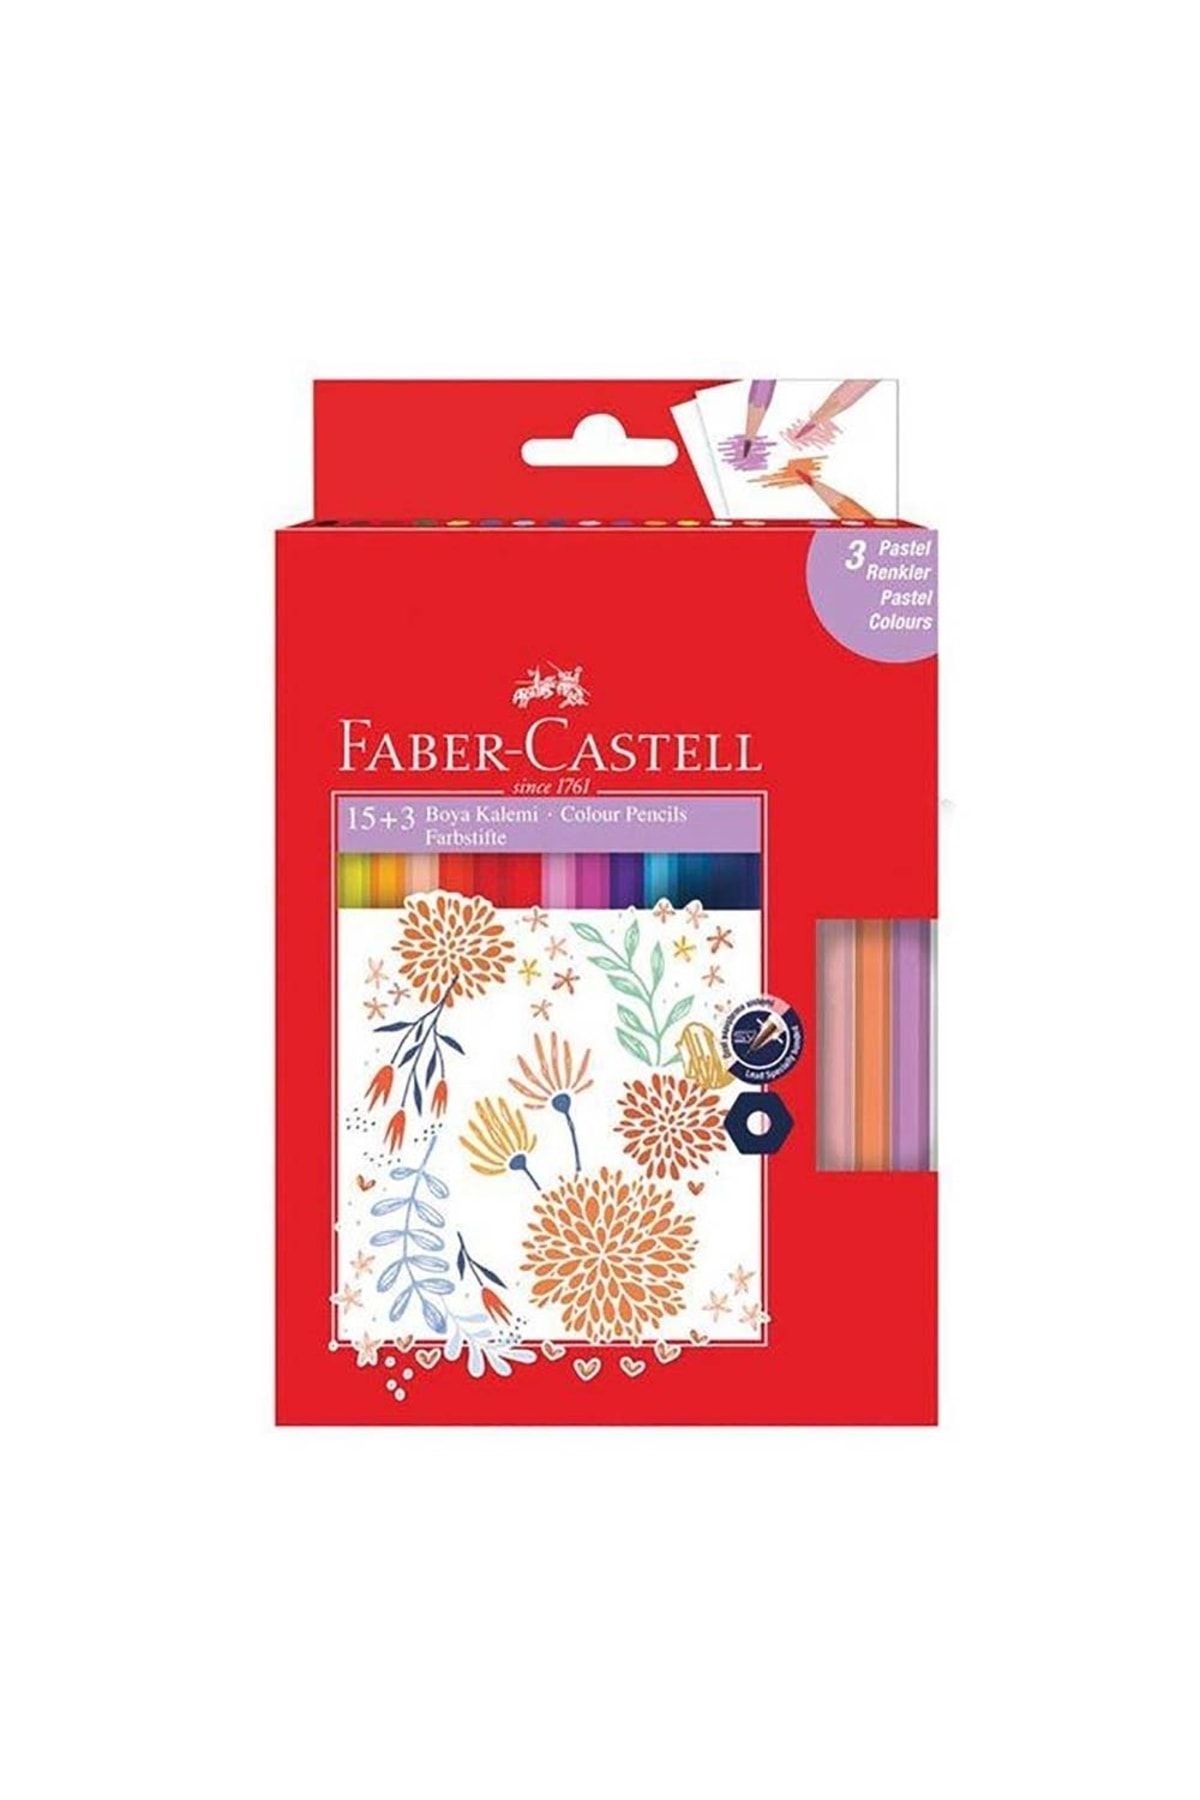 Faber Castell Faber Boya Kalemi 15+3 Pastel Renk 5171000005000